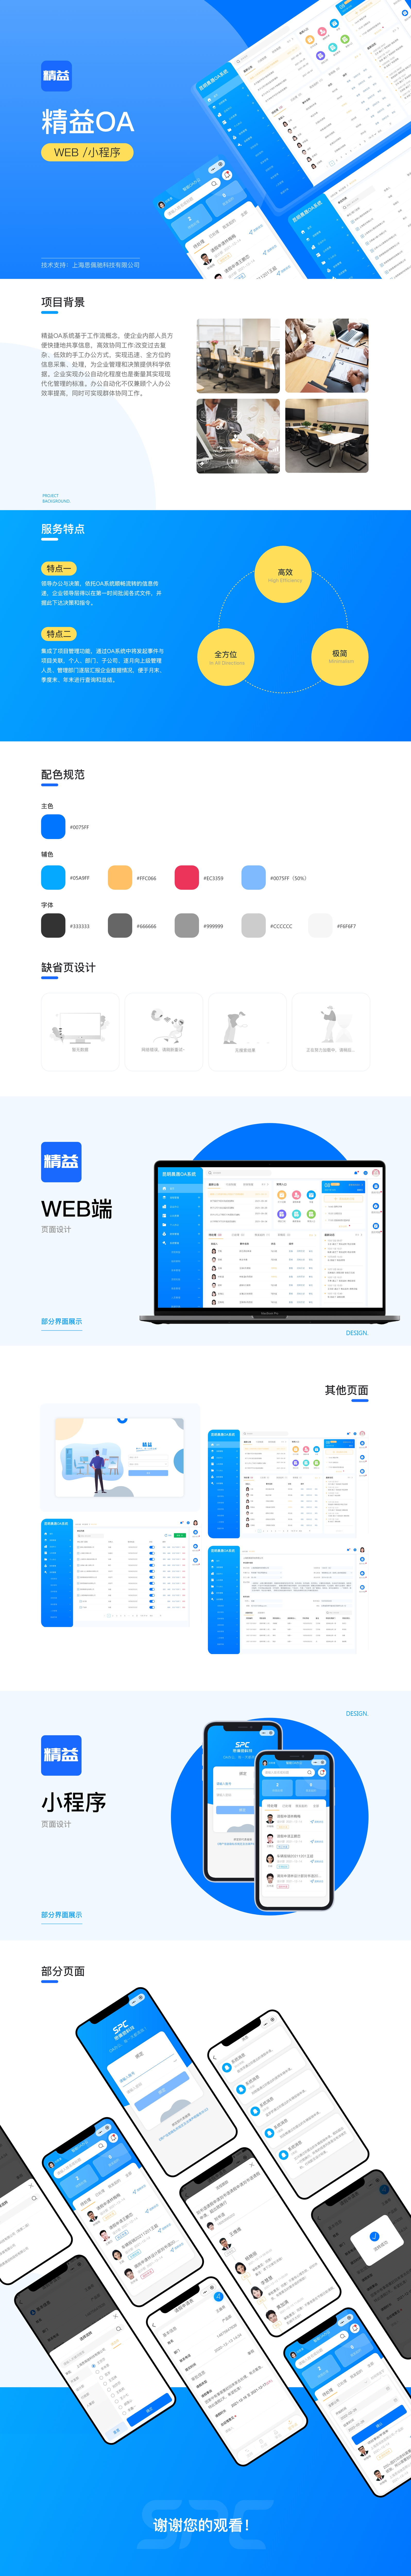 Web1200 – 精益OA.jpg